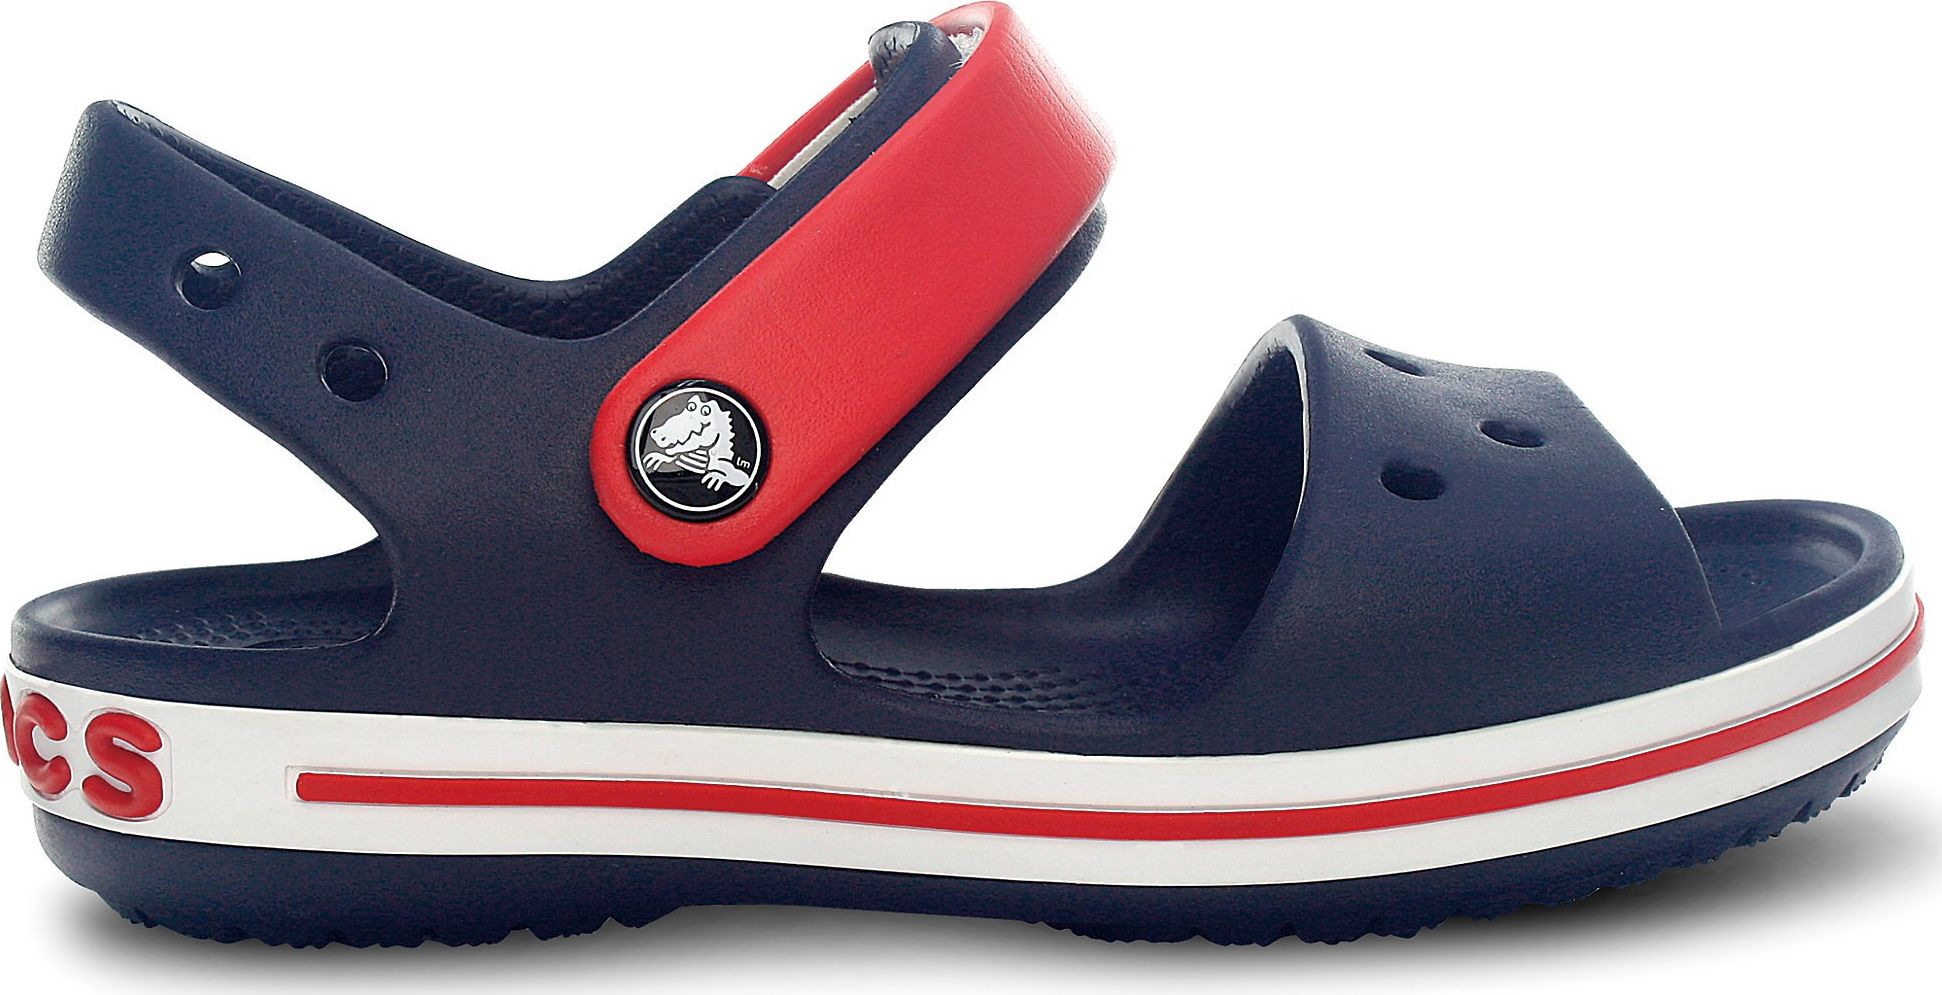 Sandale Crocs Crocband Jr copii bleumarin-roșu 20-21